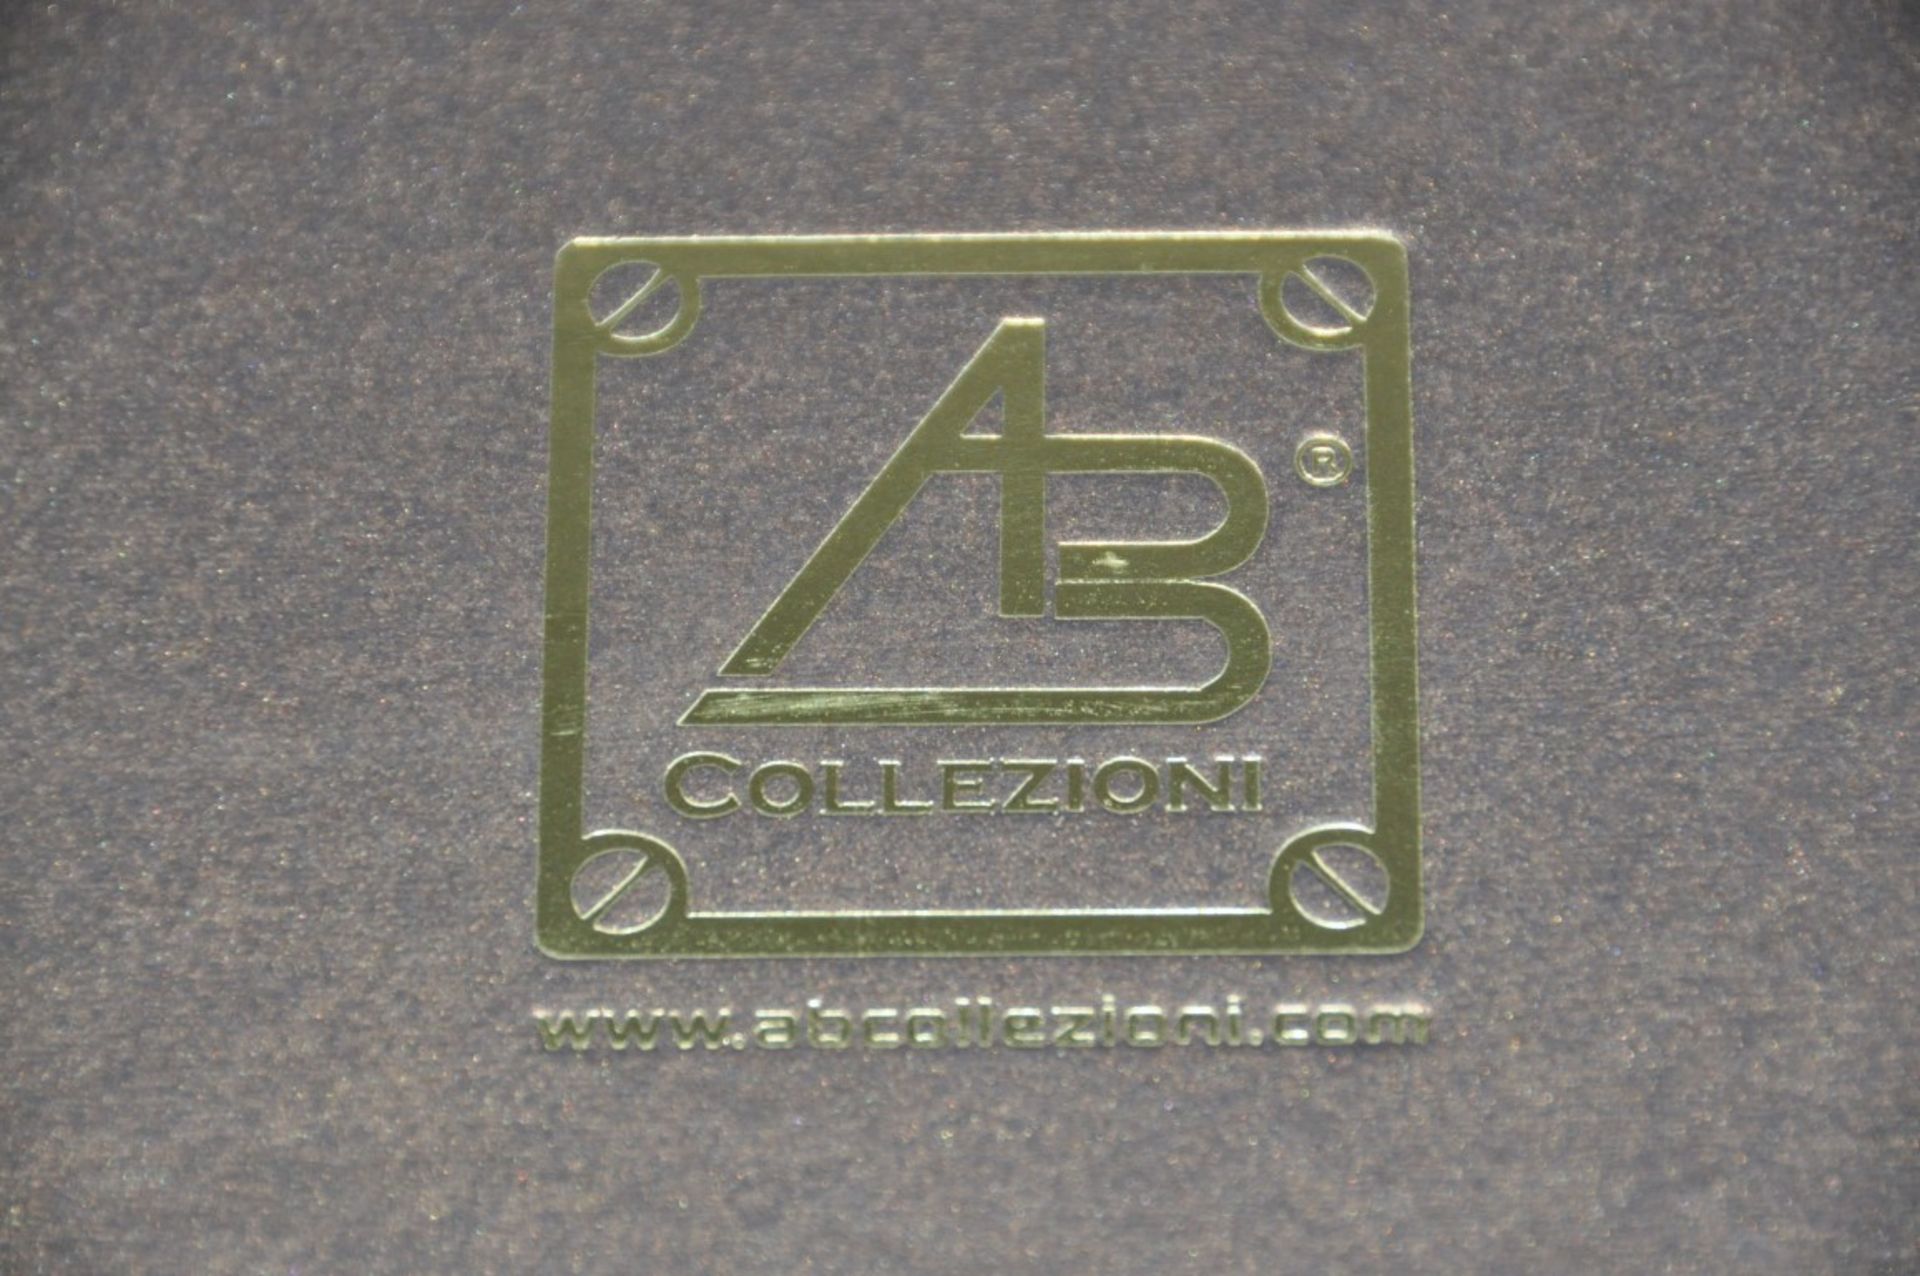 1 x "AB Collezioni" Italian Genuine Leather-Bound Luxury POKER SET (34048) - Features Beautiful - Image 5 of 8